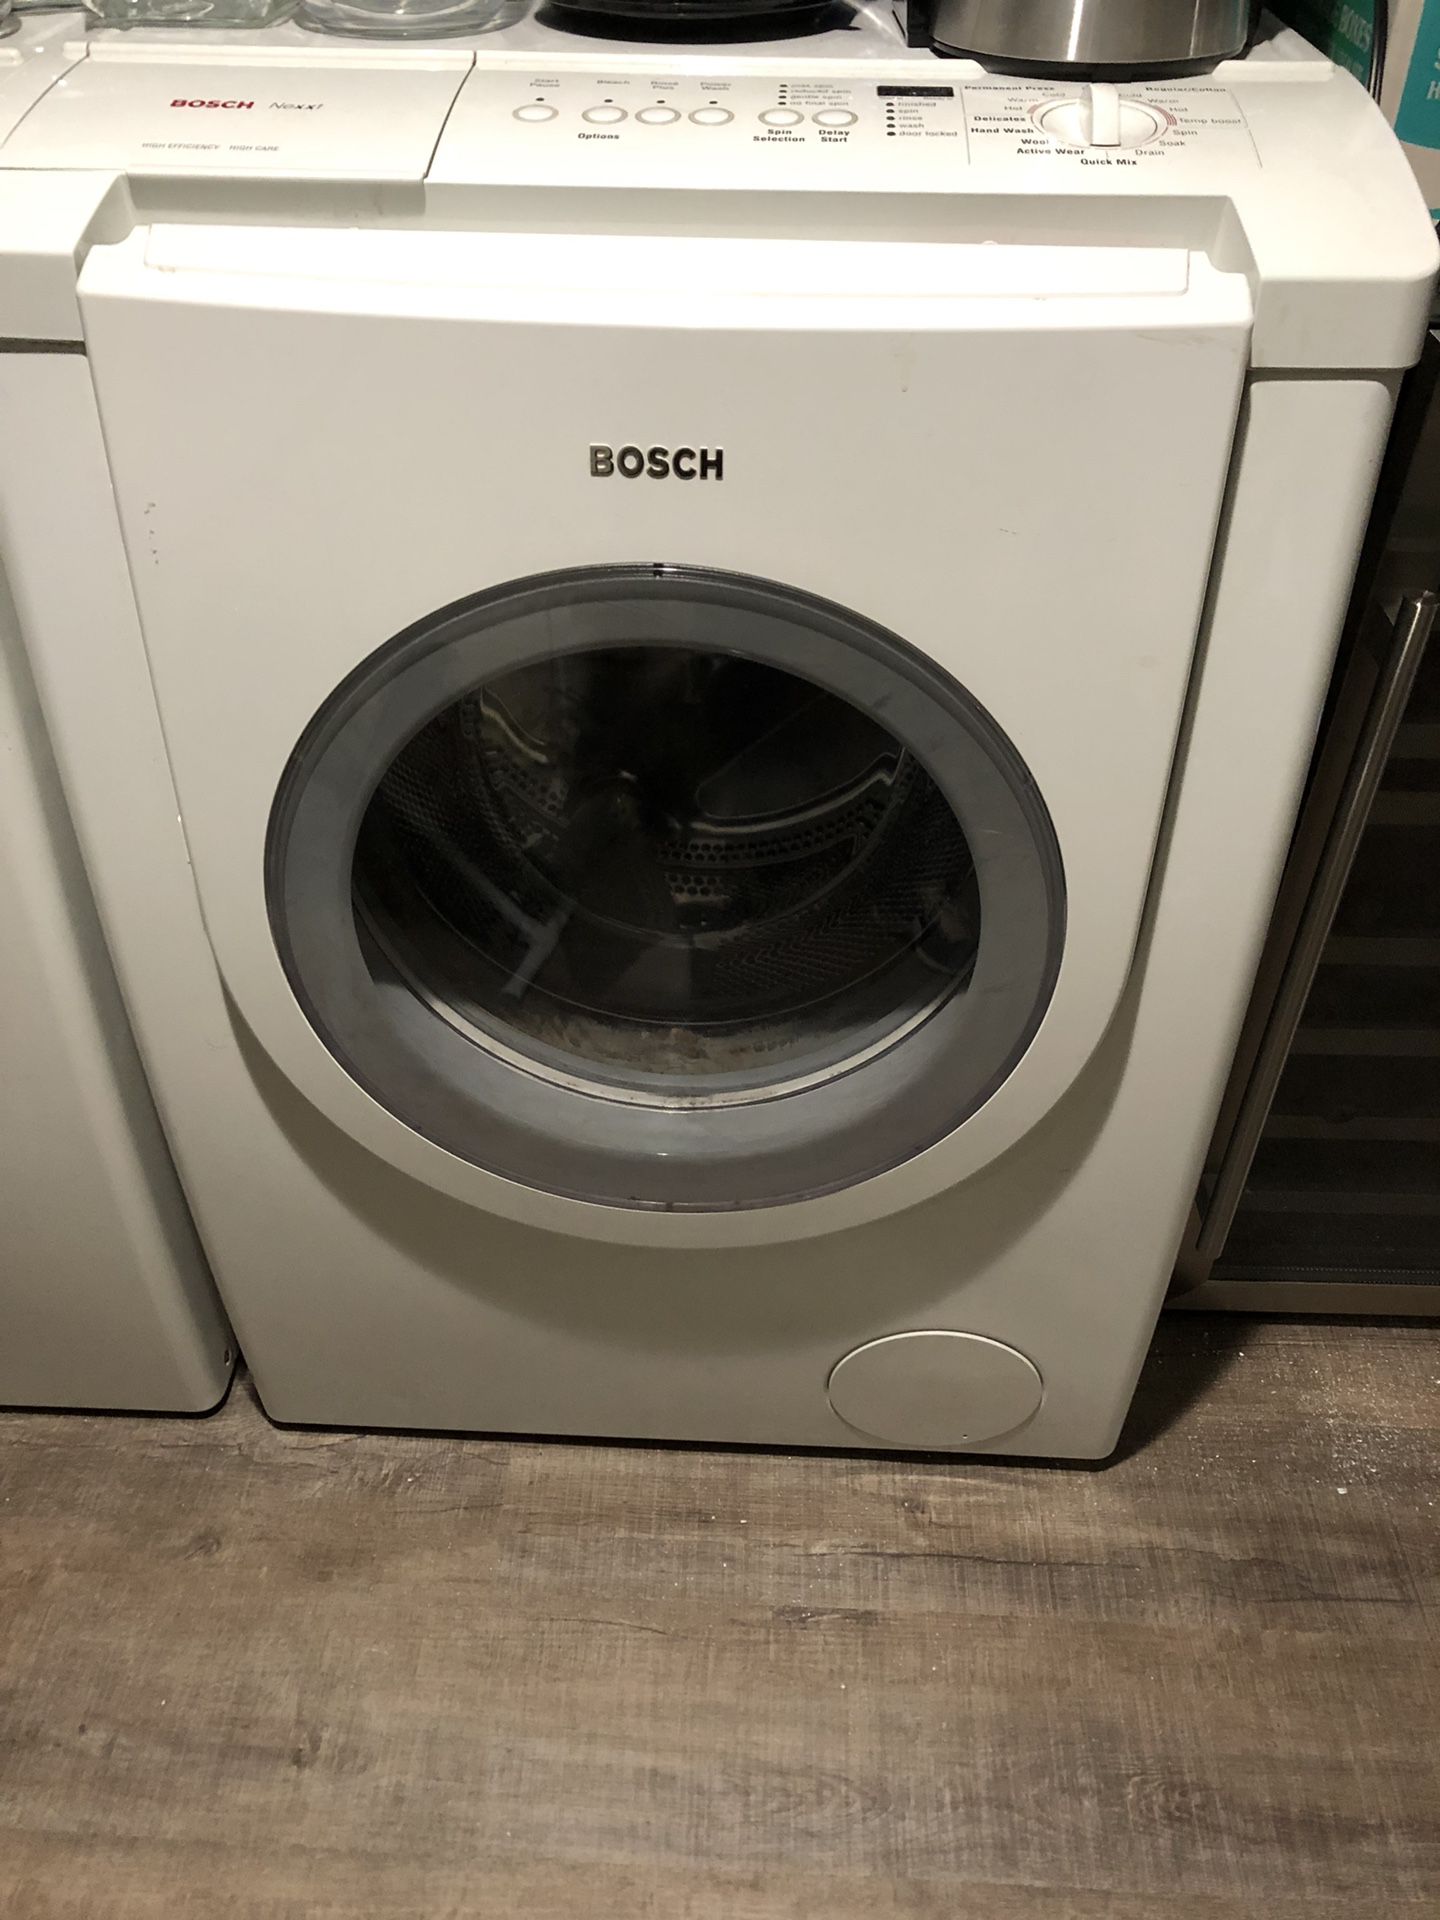 Bosch Nexxt Washer and Dryer.